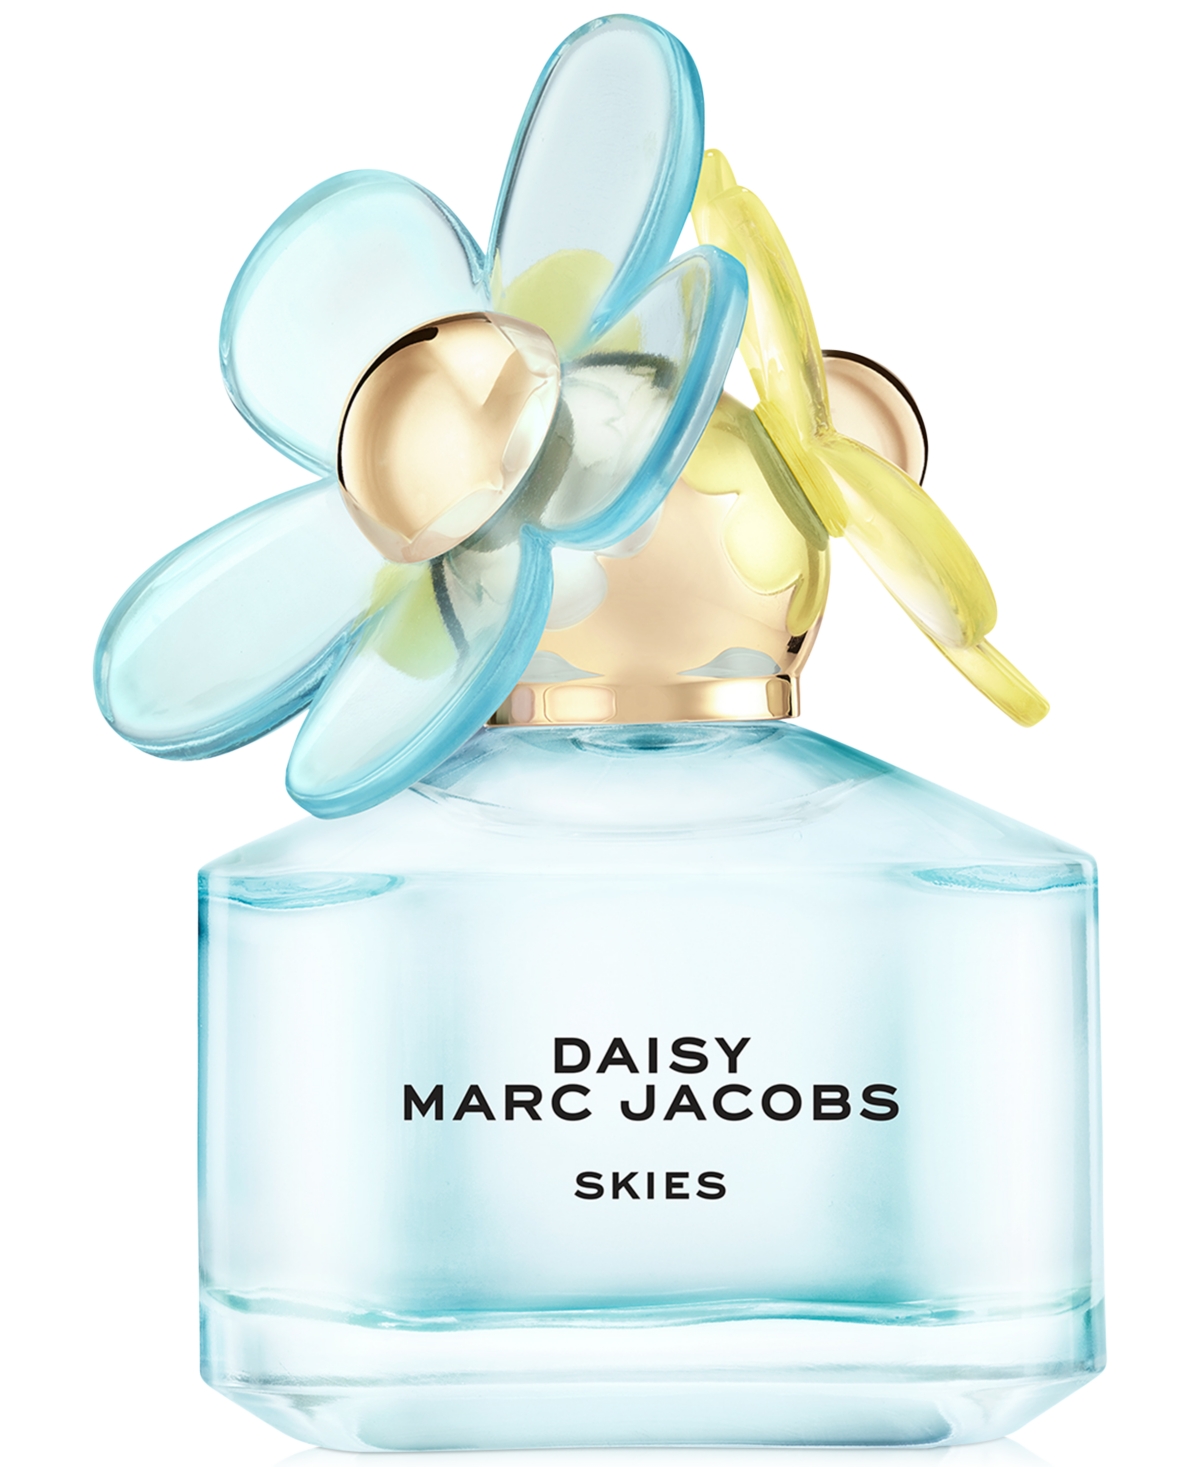 Marc Jacobs Daisy Skies Eau de Toilette Spray, 1.6 oz.